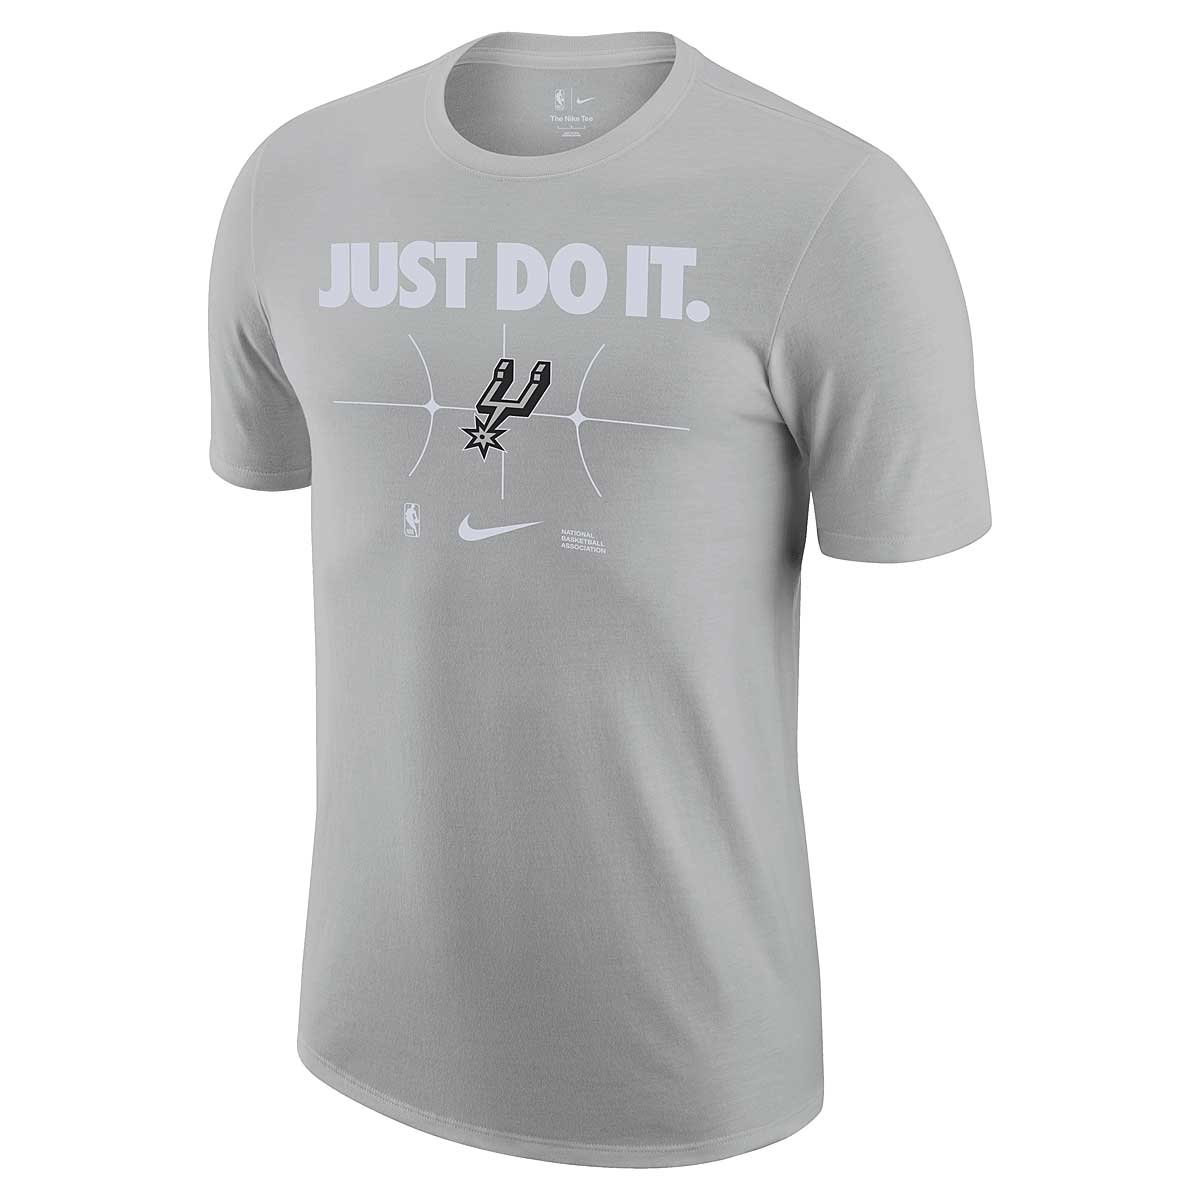 Nike NBA San Antonio Spurs Essential Just Do It T-shirt, Flt Silver 2XL